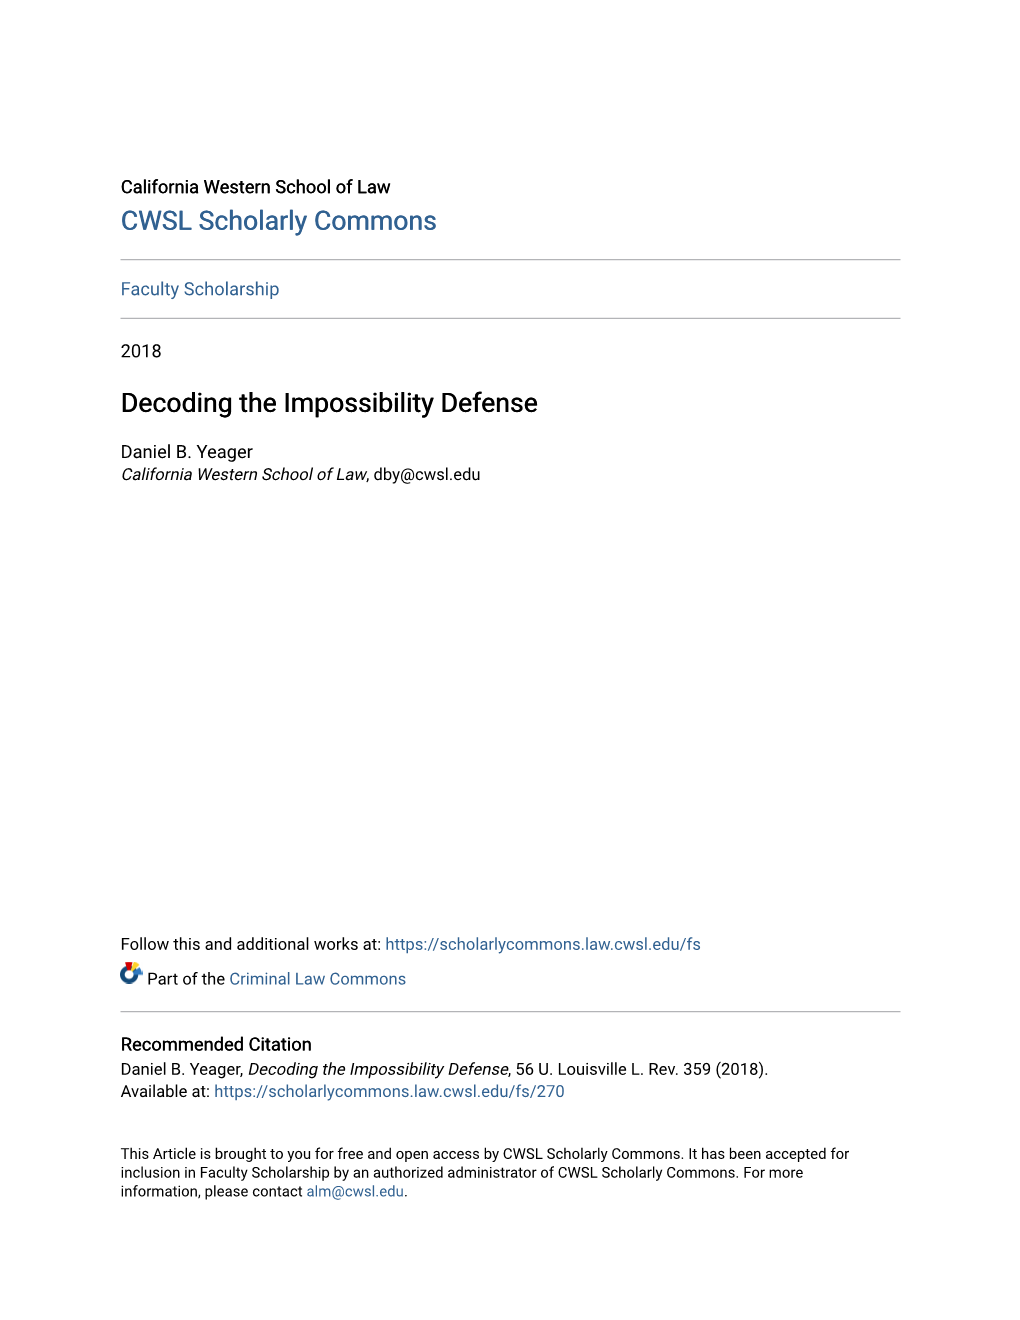 Decoding the Impossibility Defense